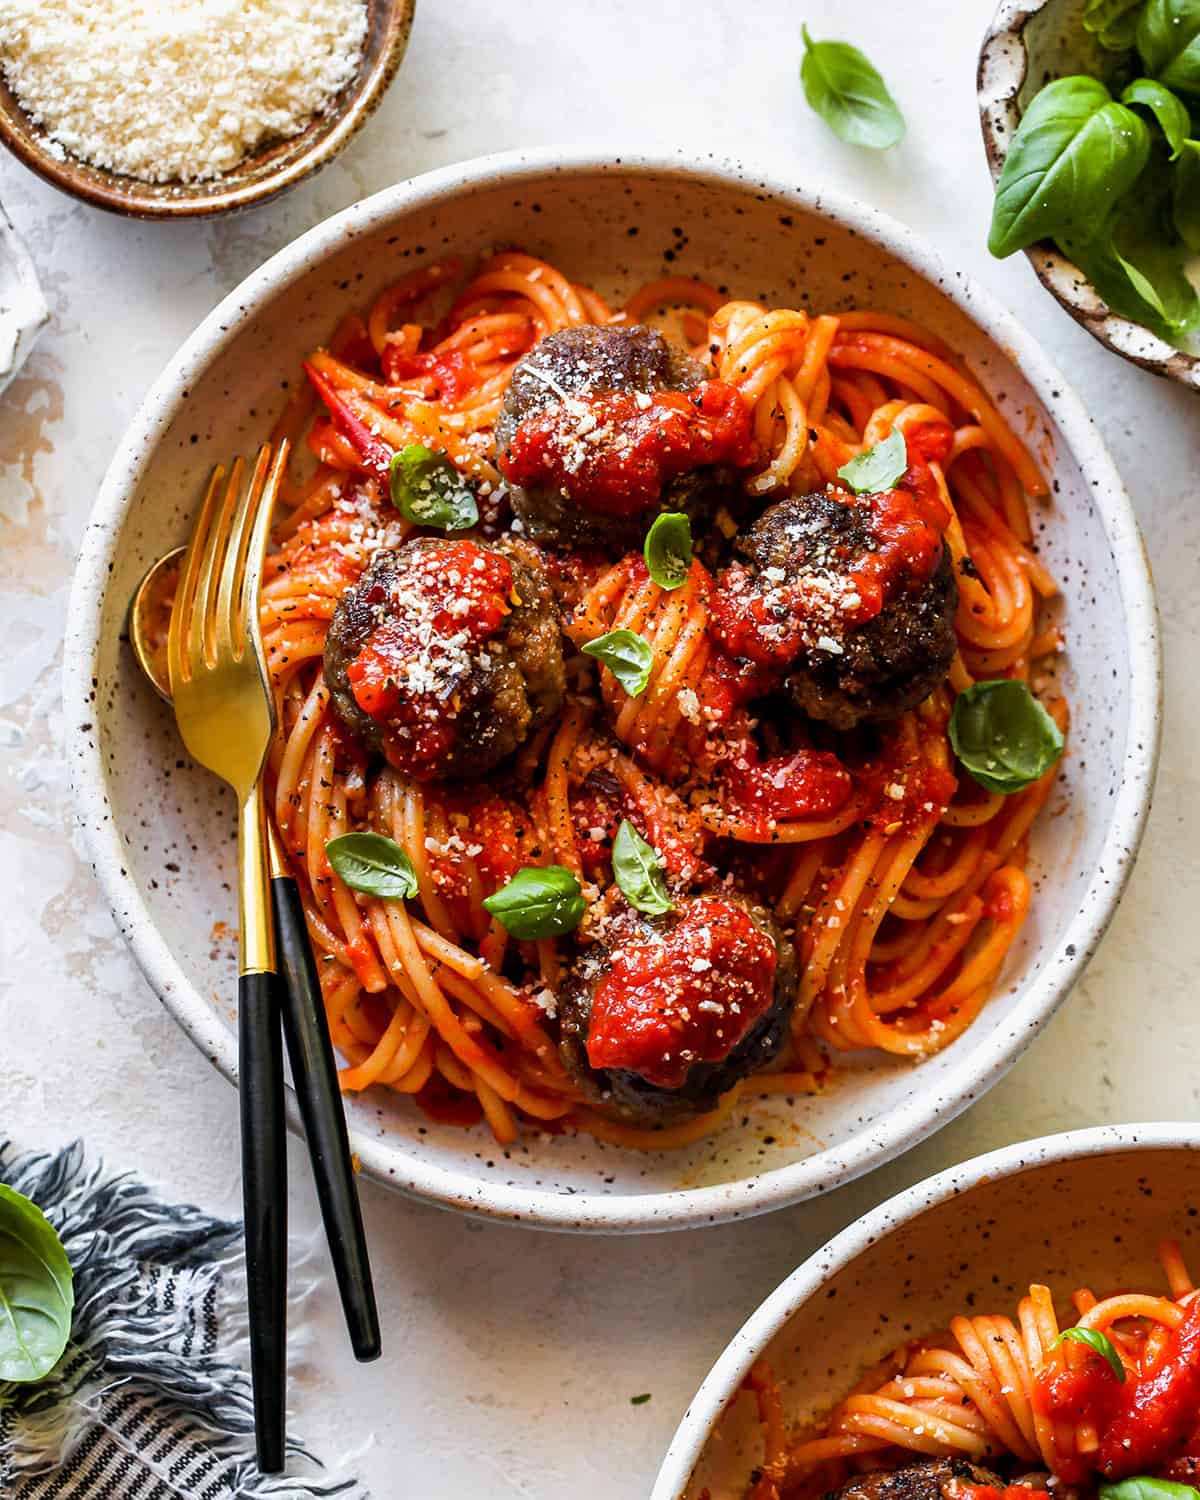 homemade meatballs over pasta in marinara sauce garnished with basil